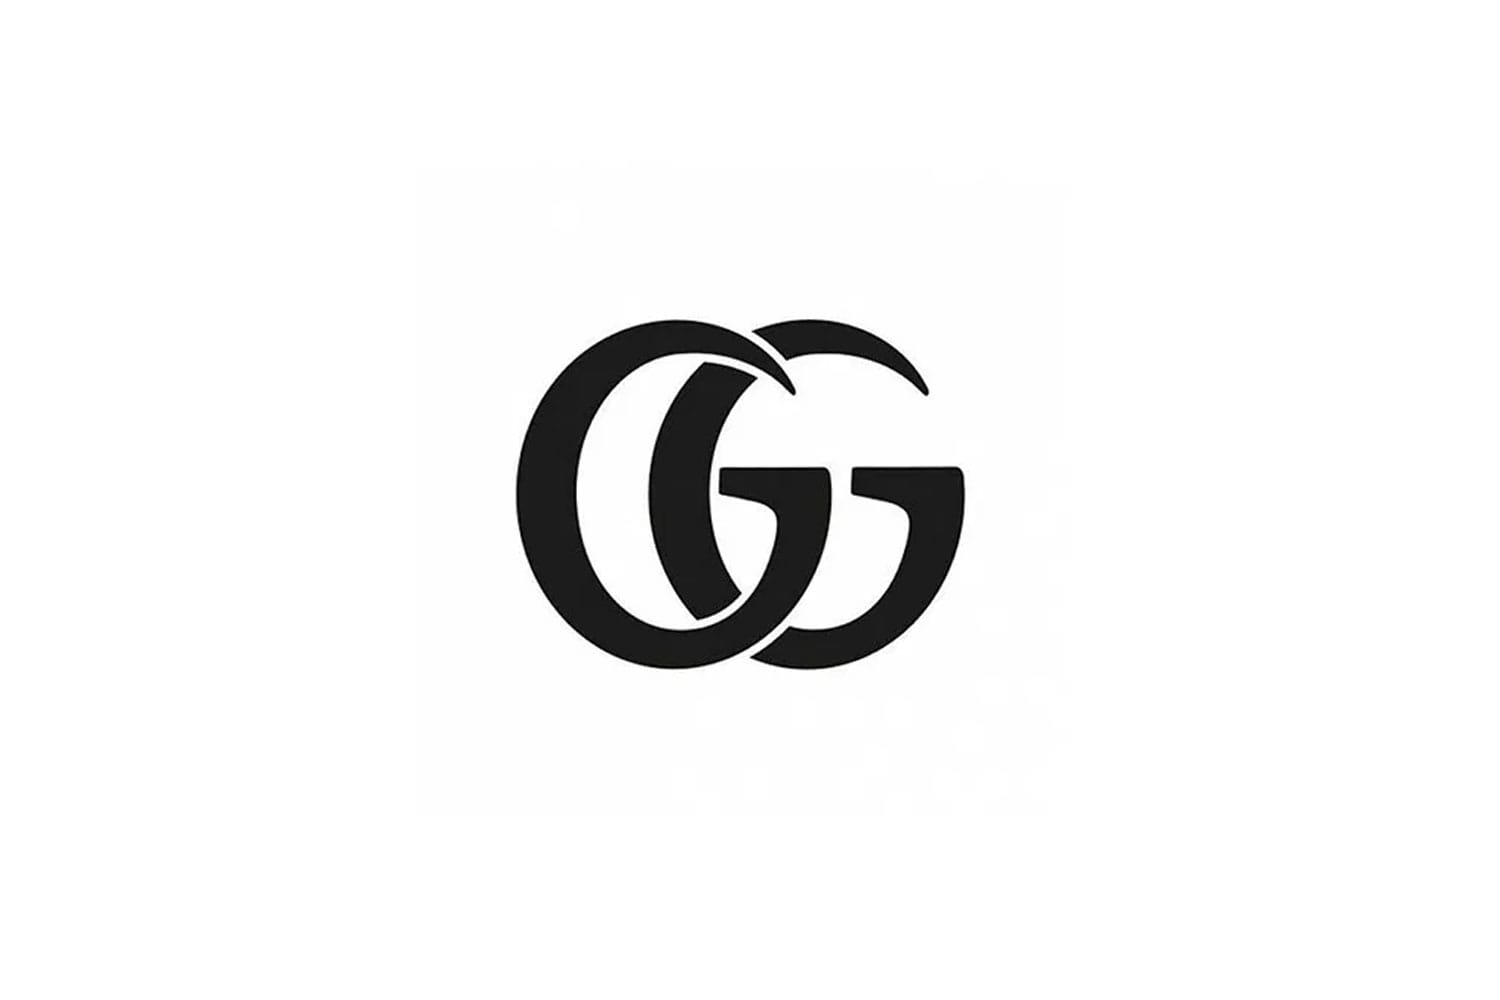 gucci 2019 logo